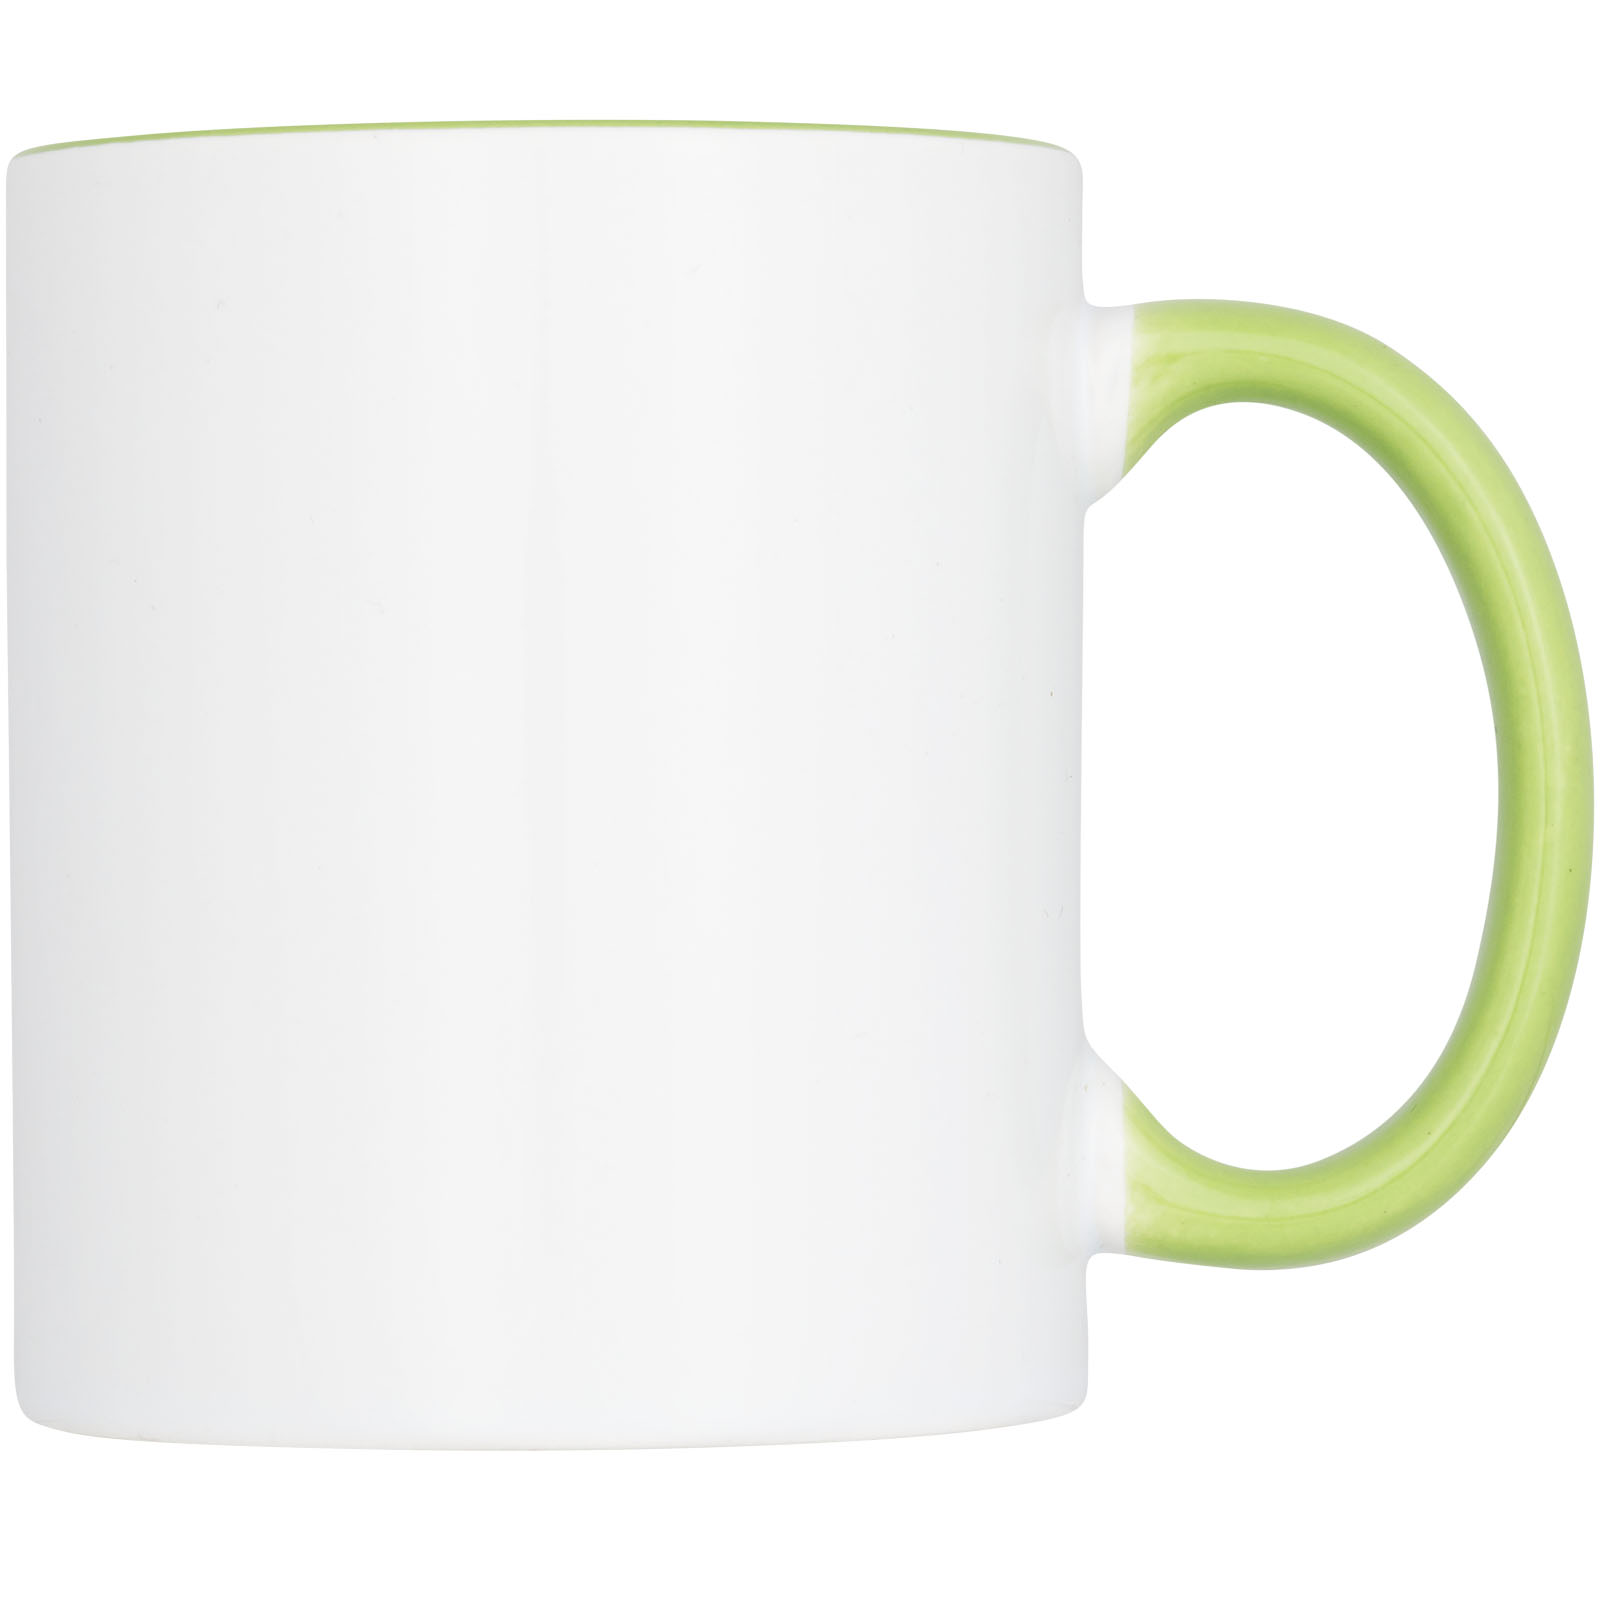 Advertising Gift sets - Ceramic sublimation mug 4-pieces gift set - 1